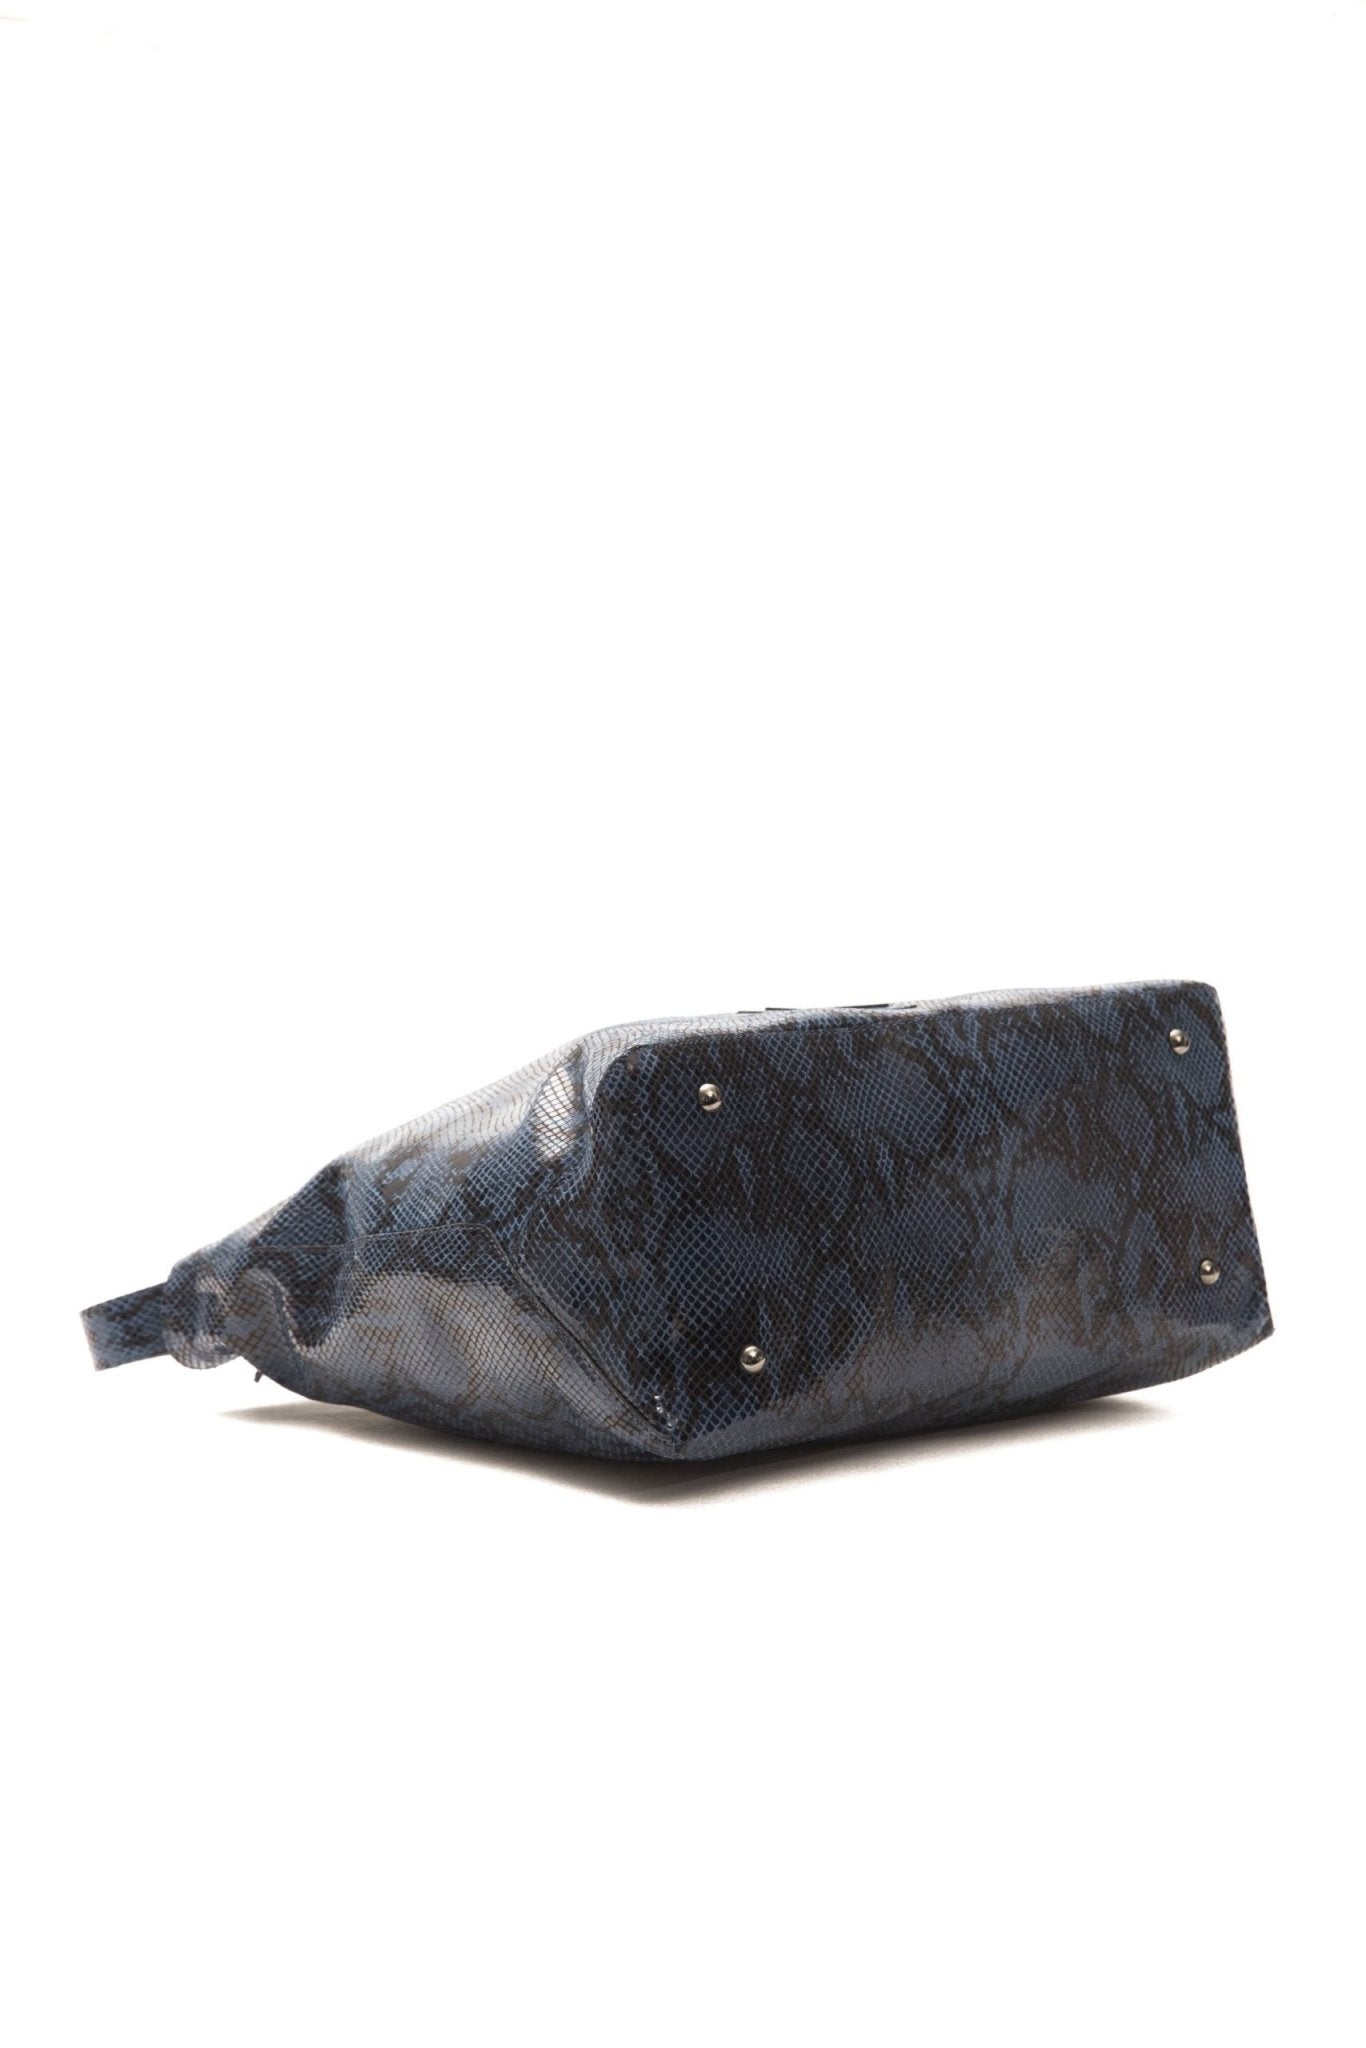 Pompei Donatella Blue Leather Shoulder Bag - Fizigo